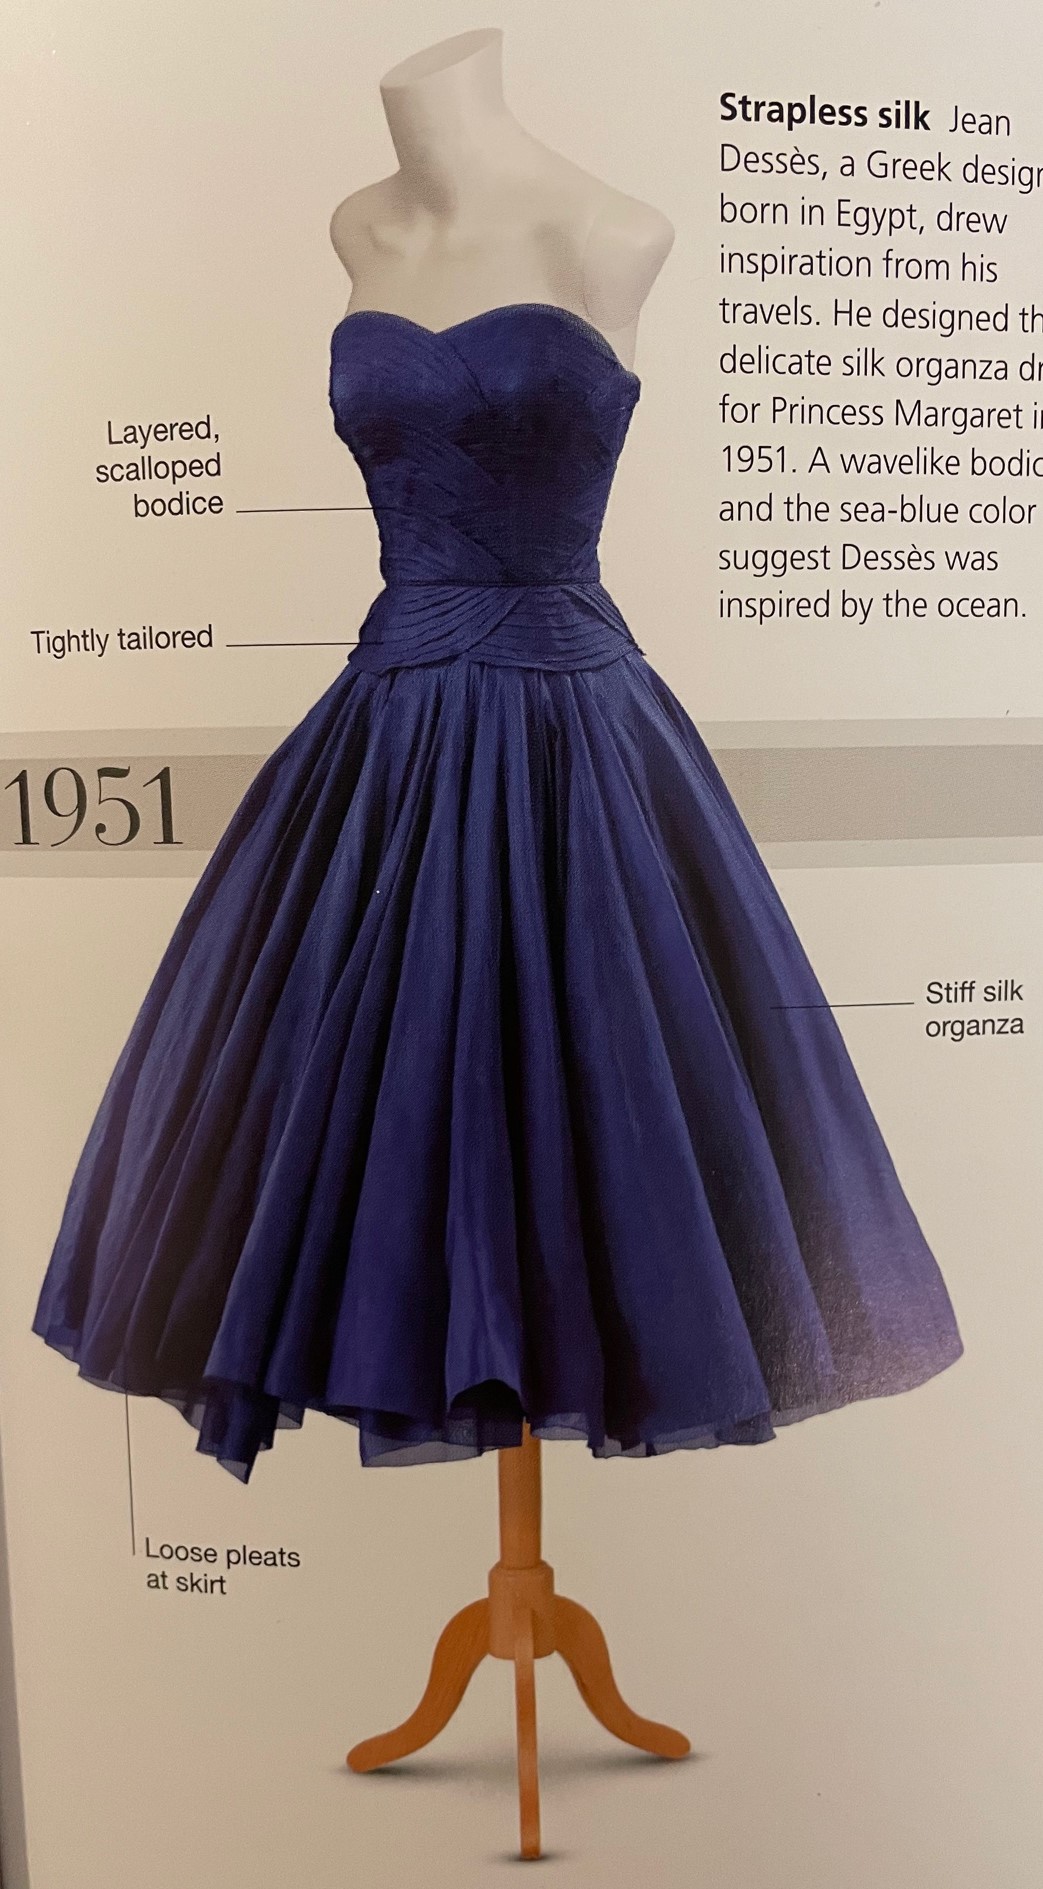 Strapless Silk Jean Dress 1951